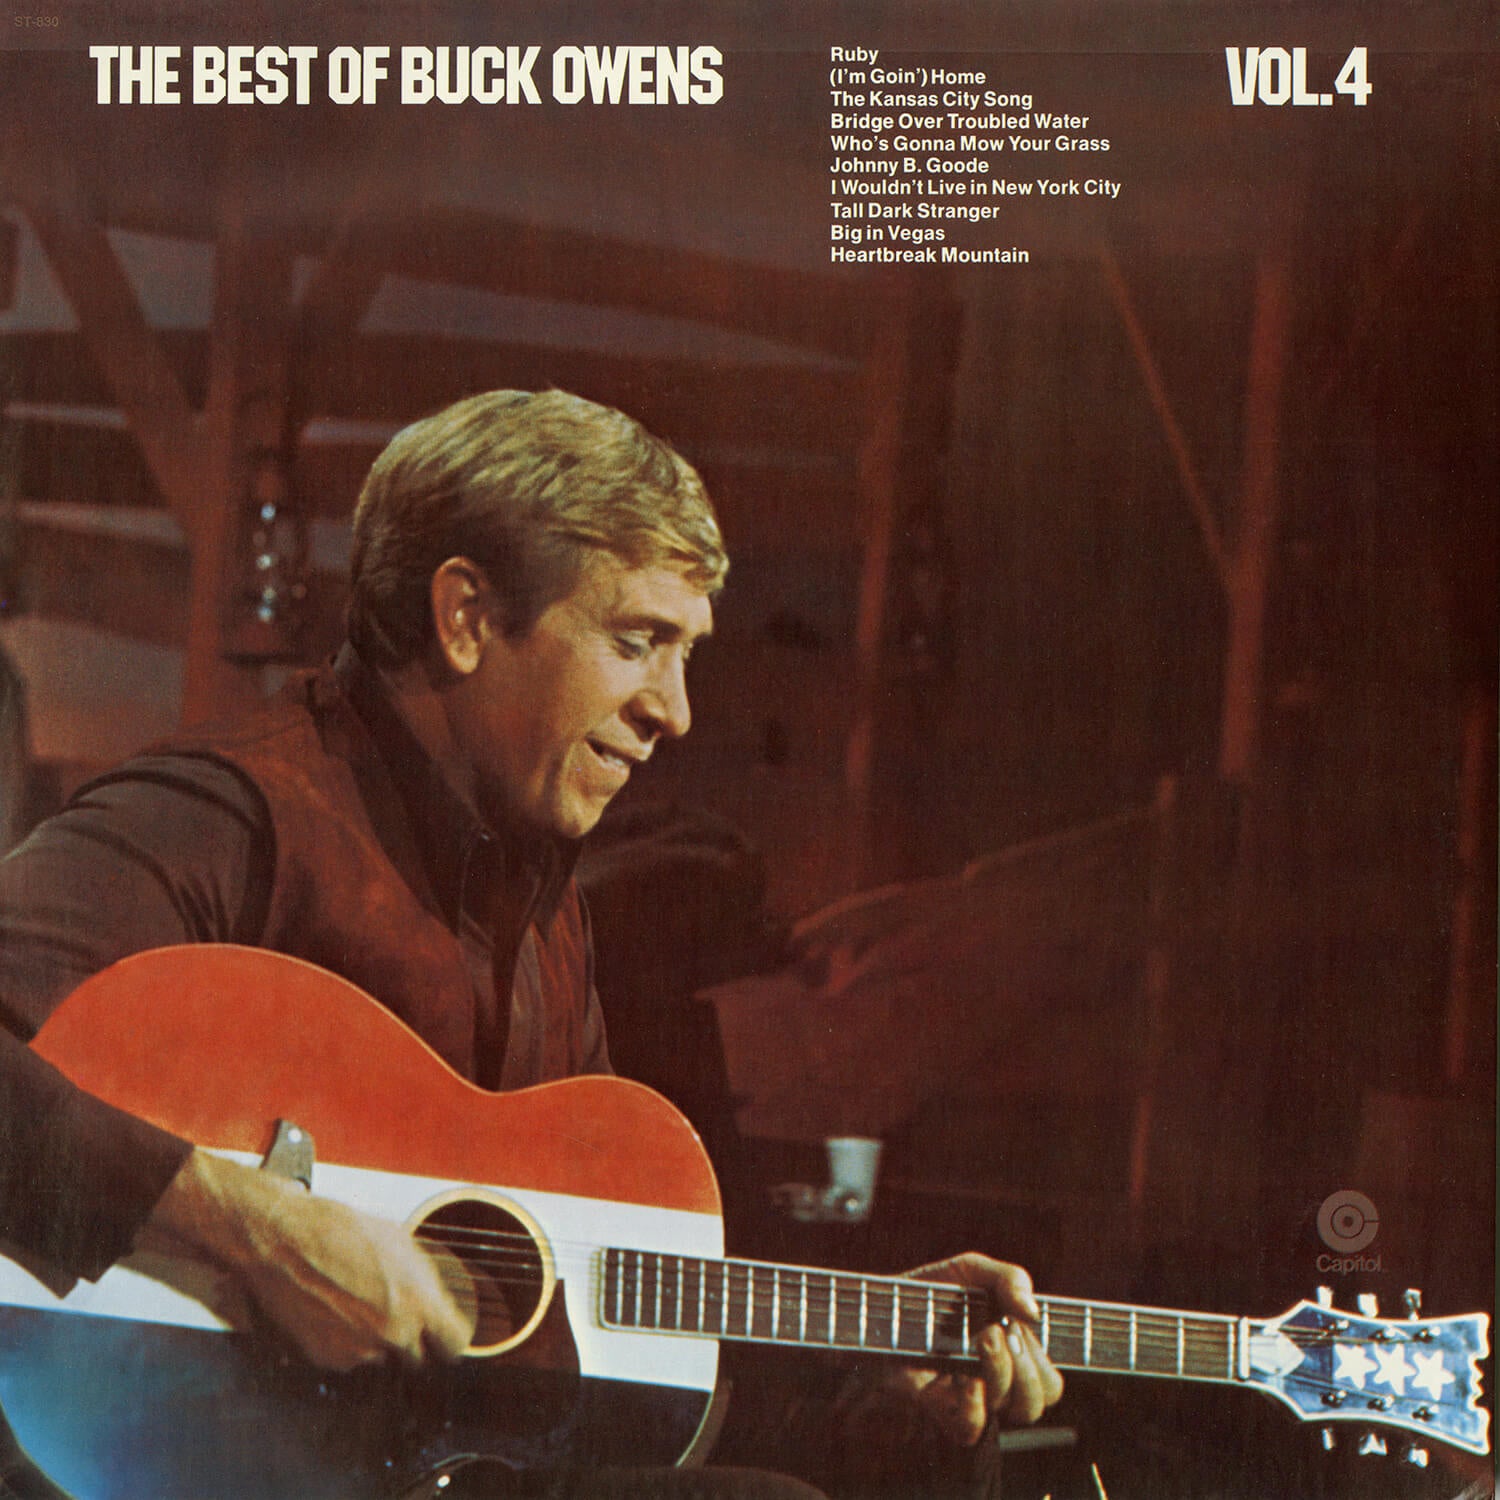 The Best of Buck Owens Vol. 4